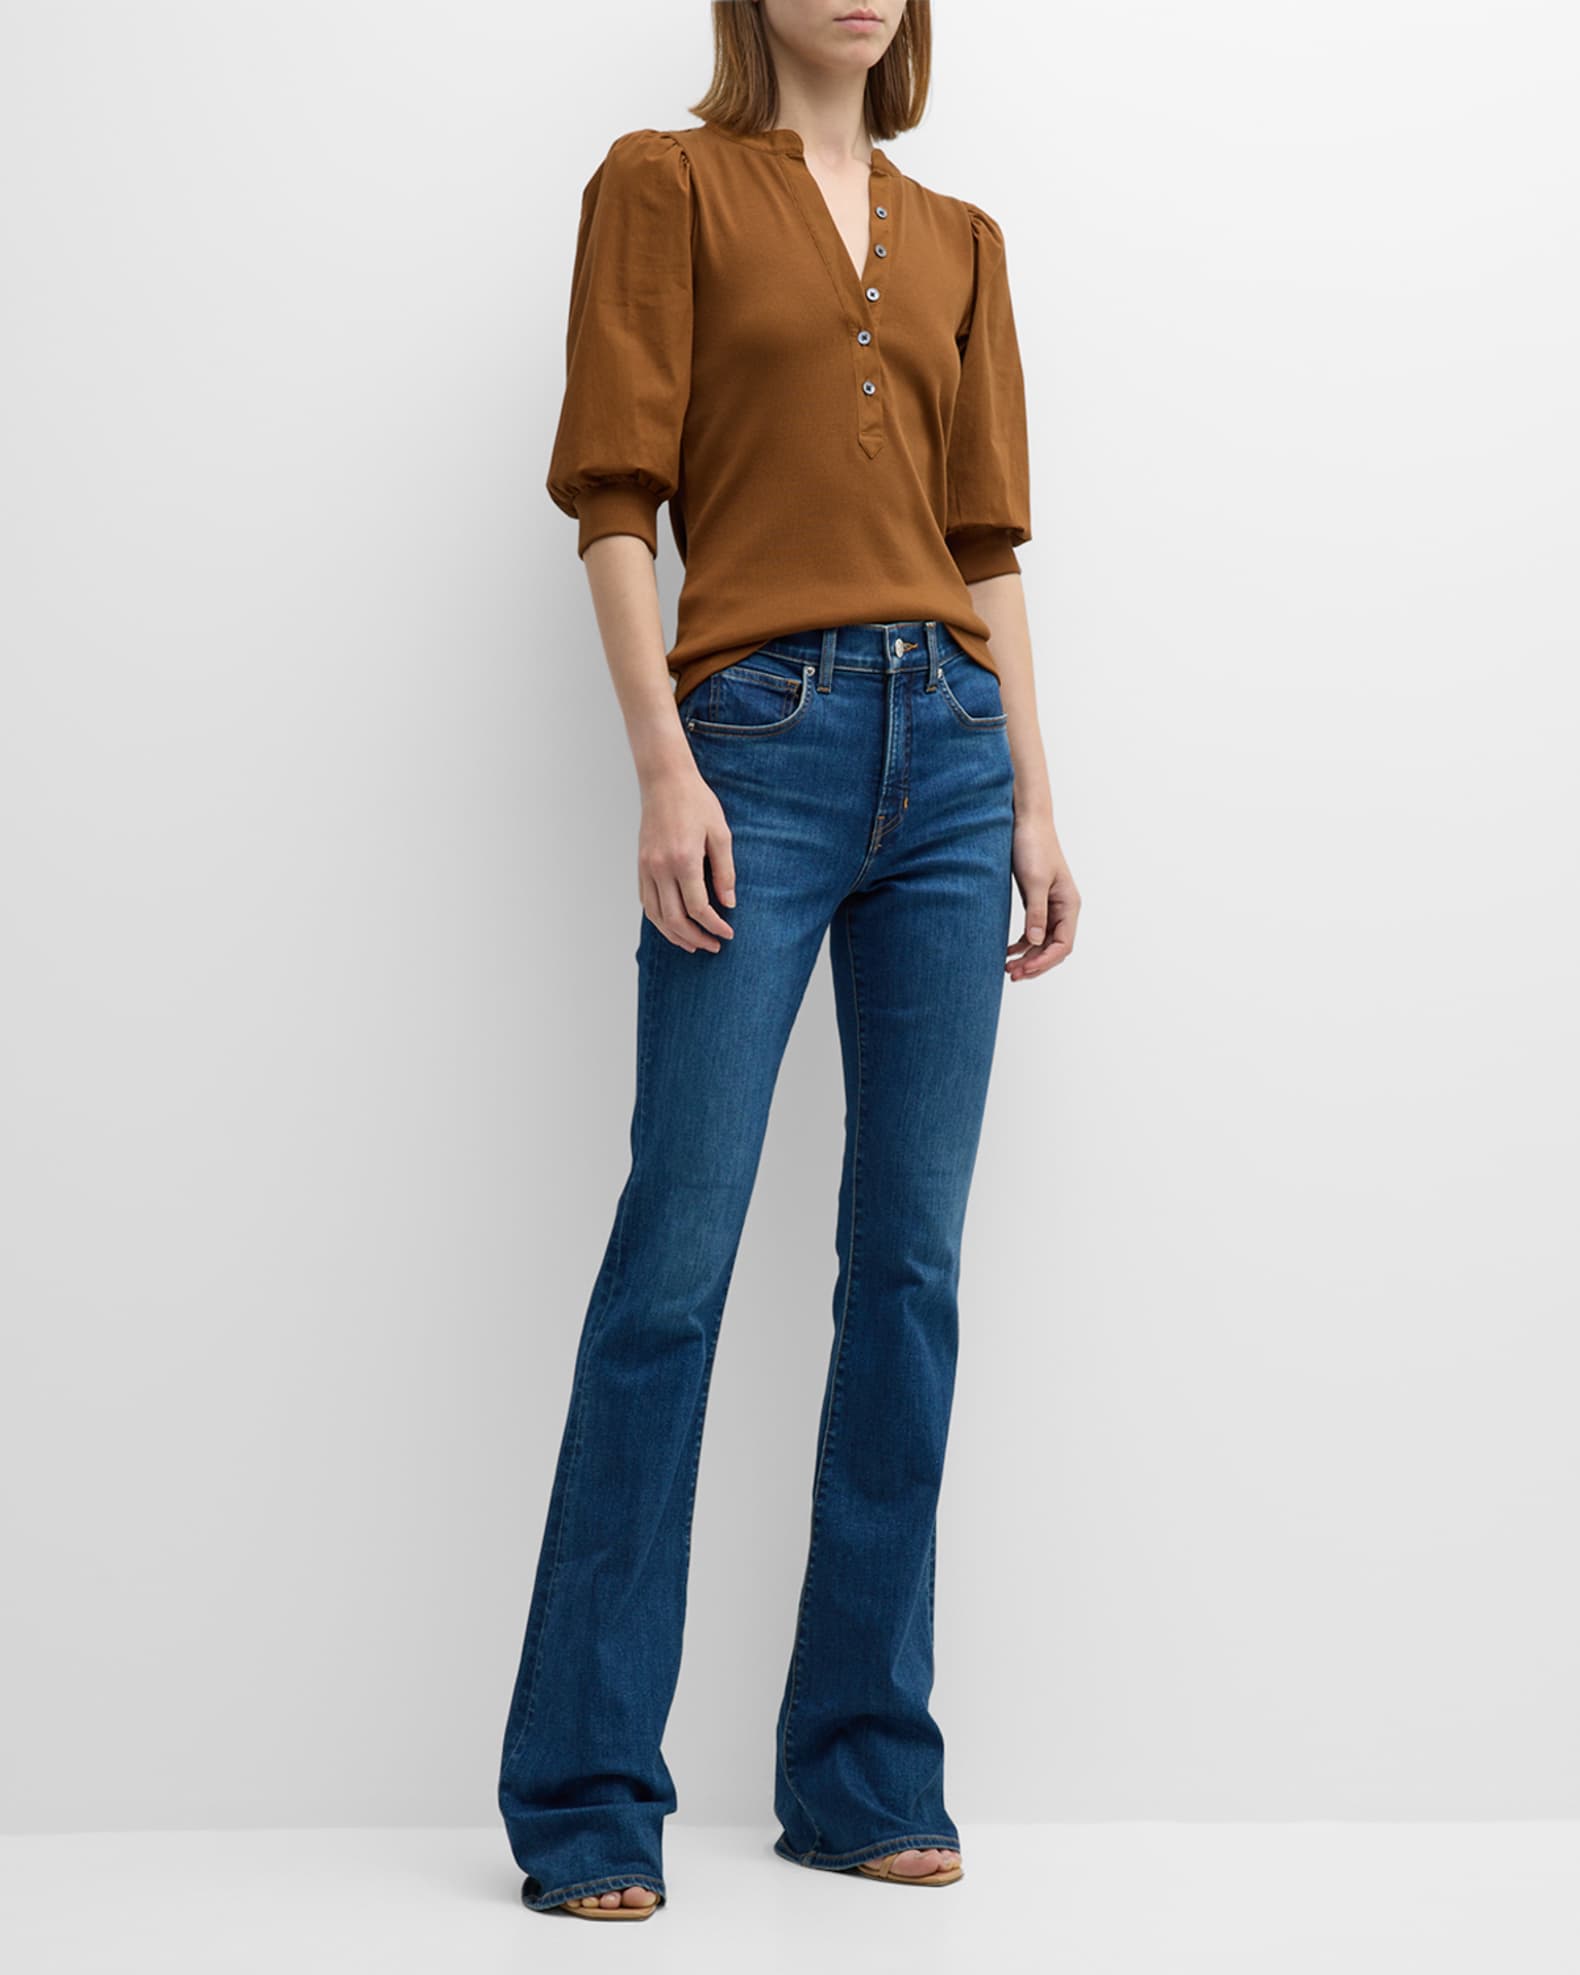 Veronica Beard Jeans Coralee Knit Half-Button Top | Neiman Marcus